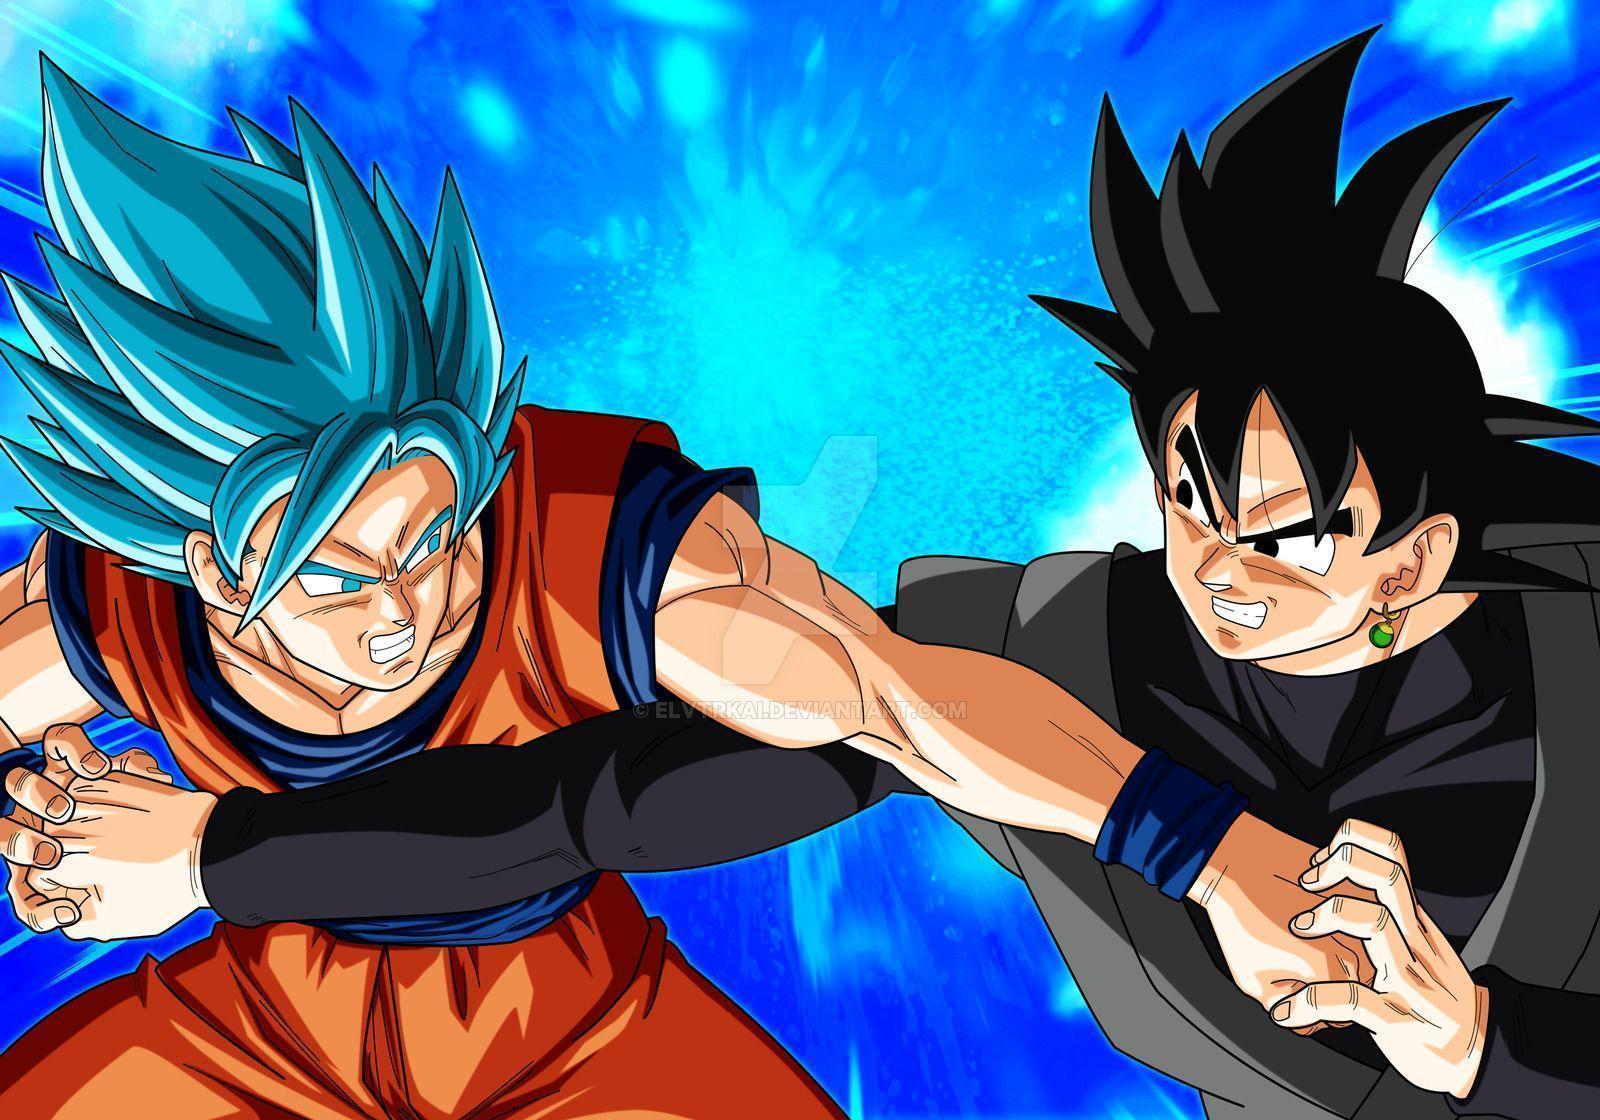 Black Goku vs Goku Wallpaper Free Black Goku vs Goku Background